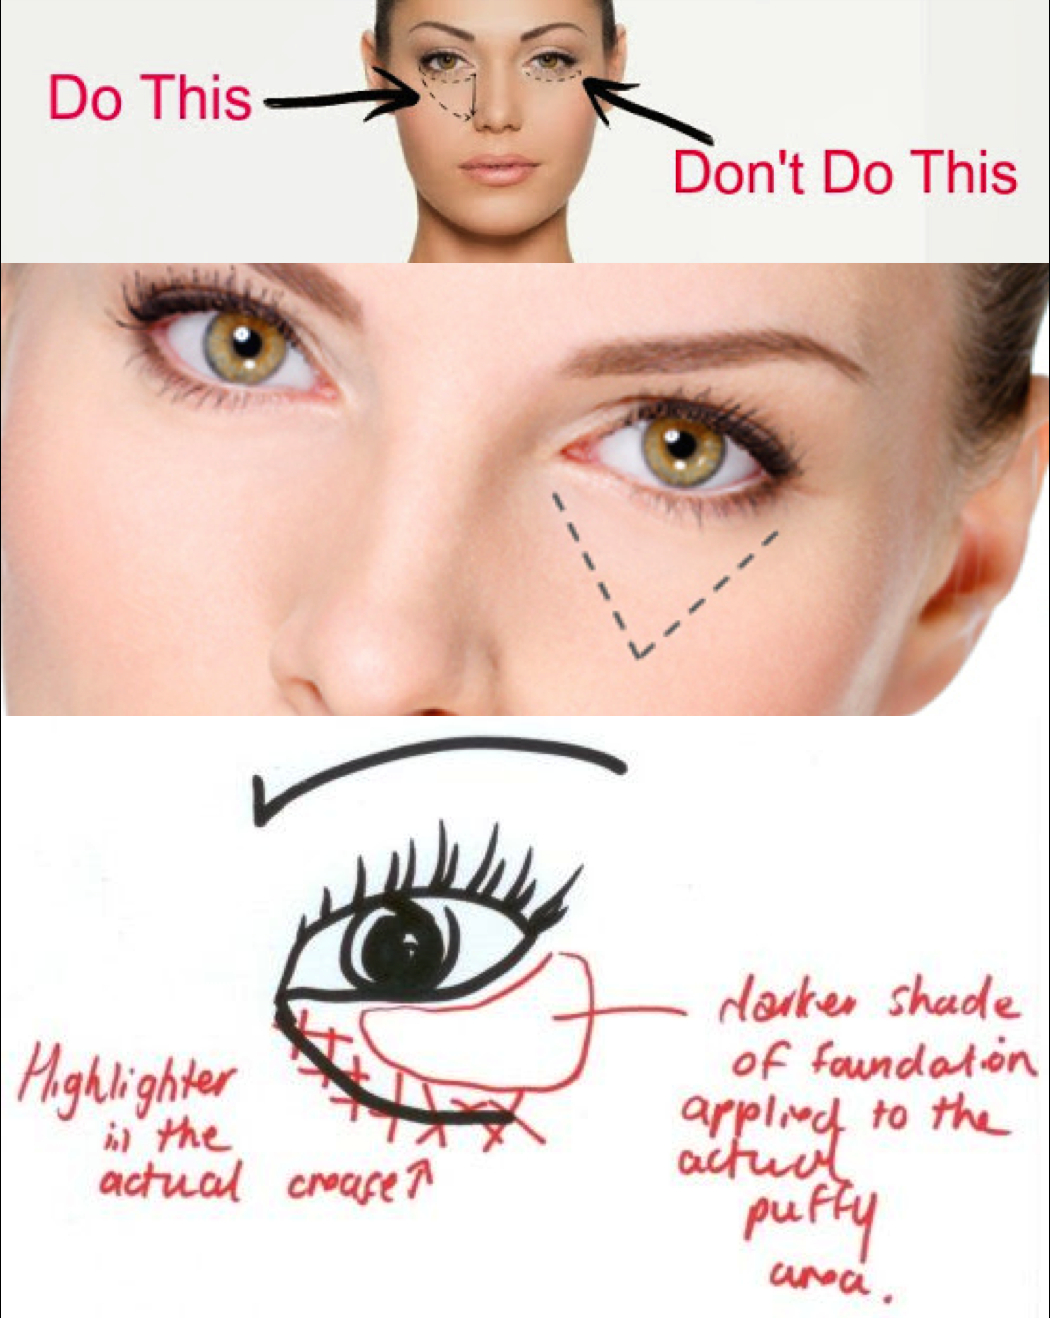 Makeup For Under Eye Bags Best Under Eye Makeup For Dark Circles Makeup Styles